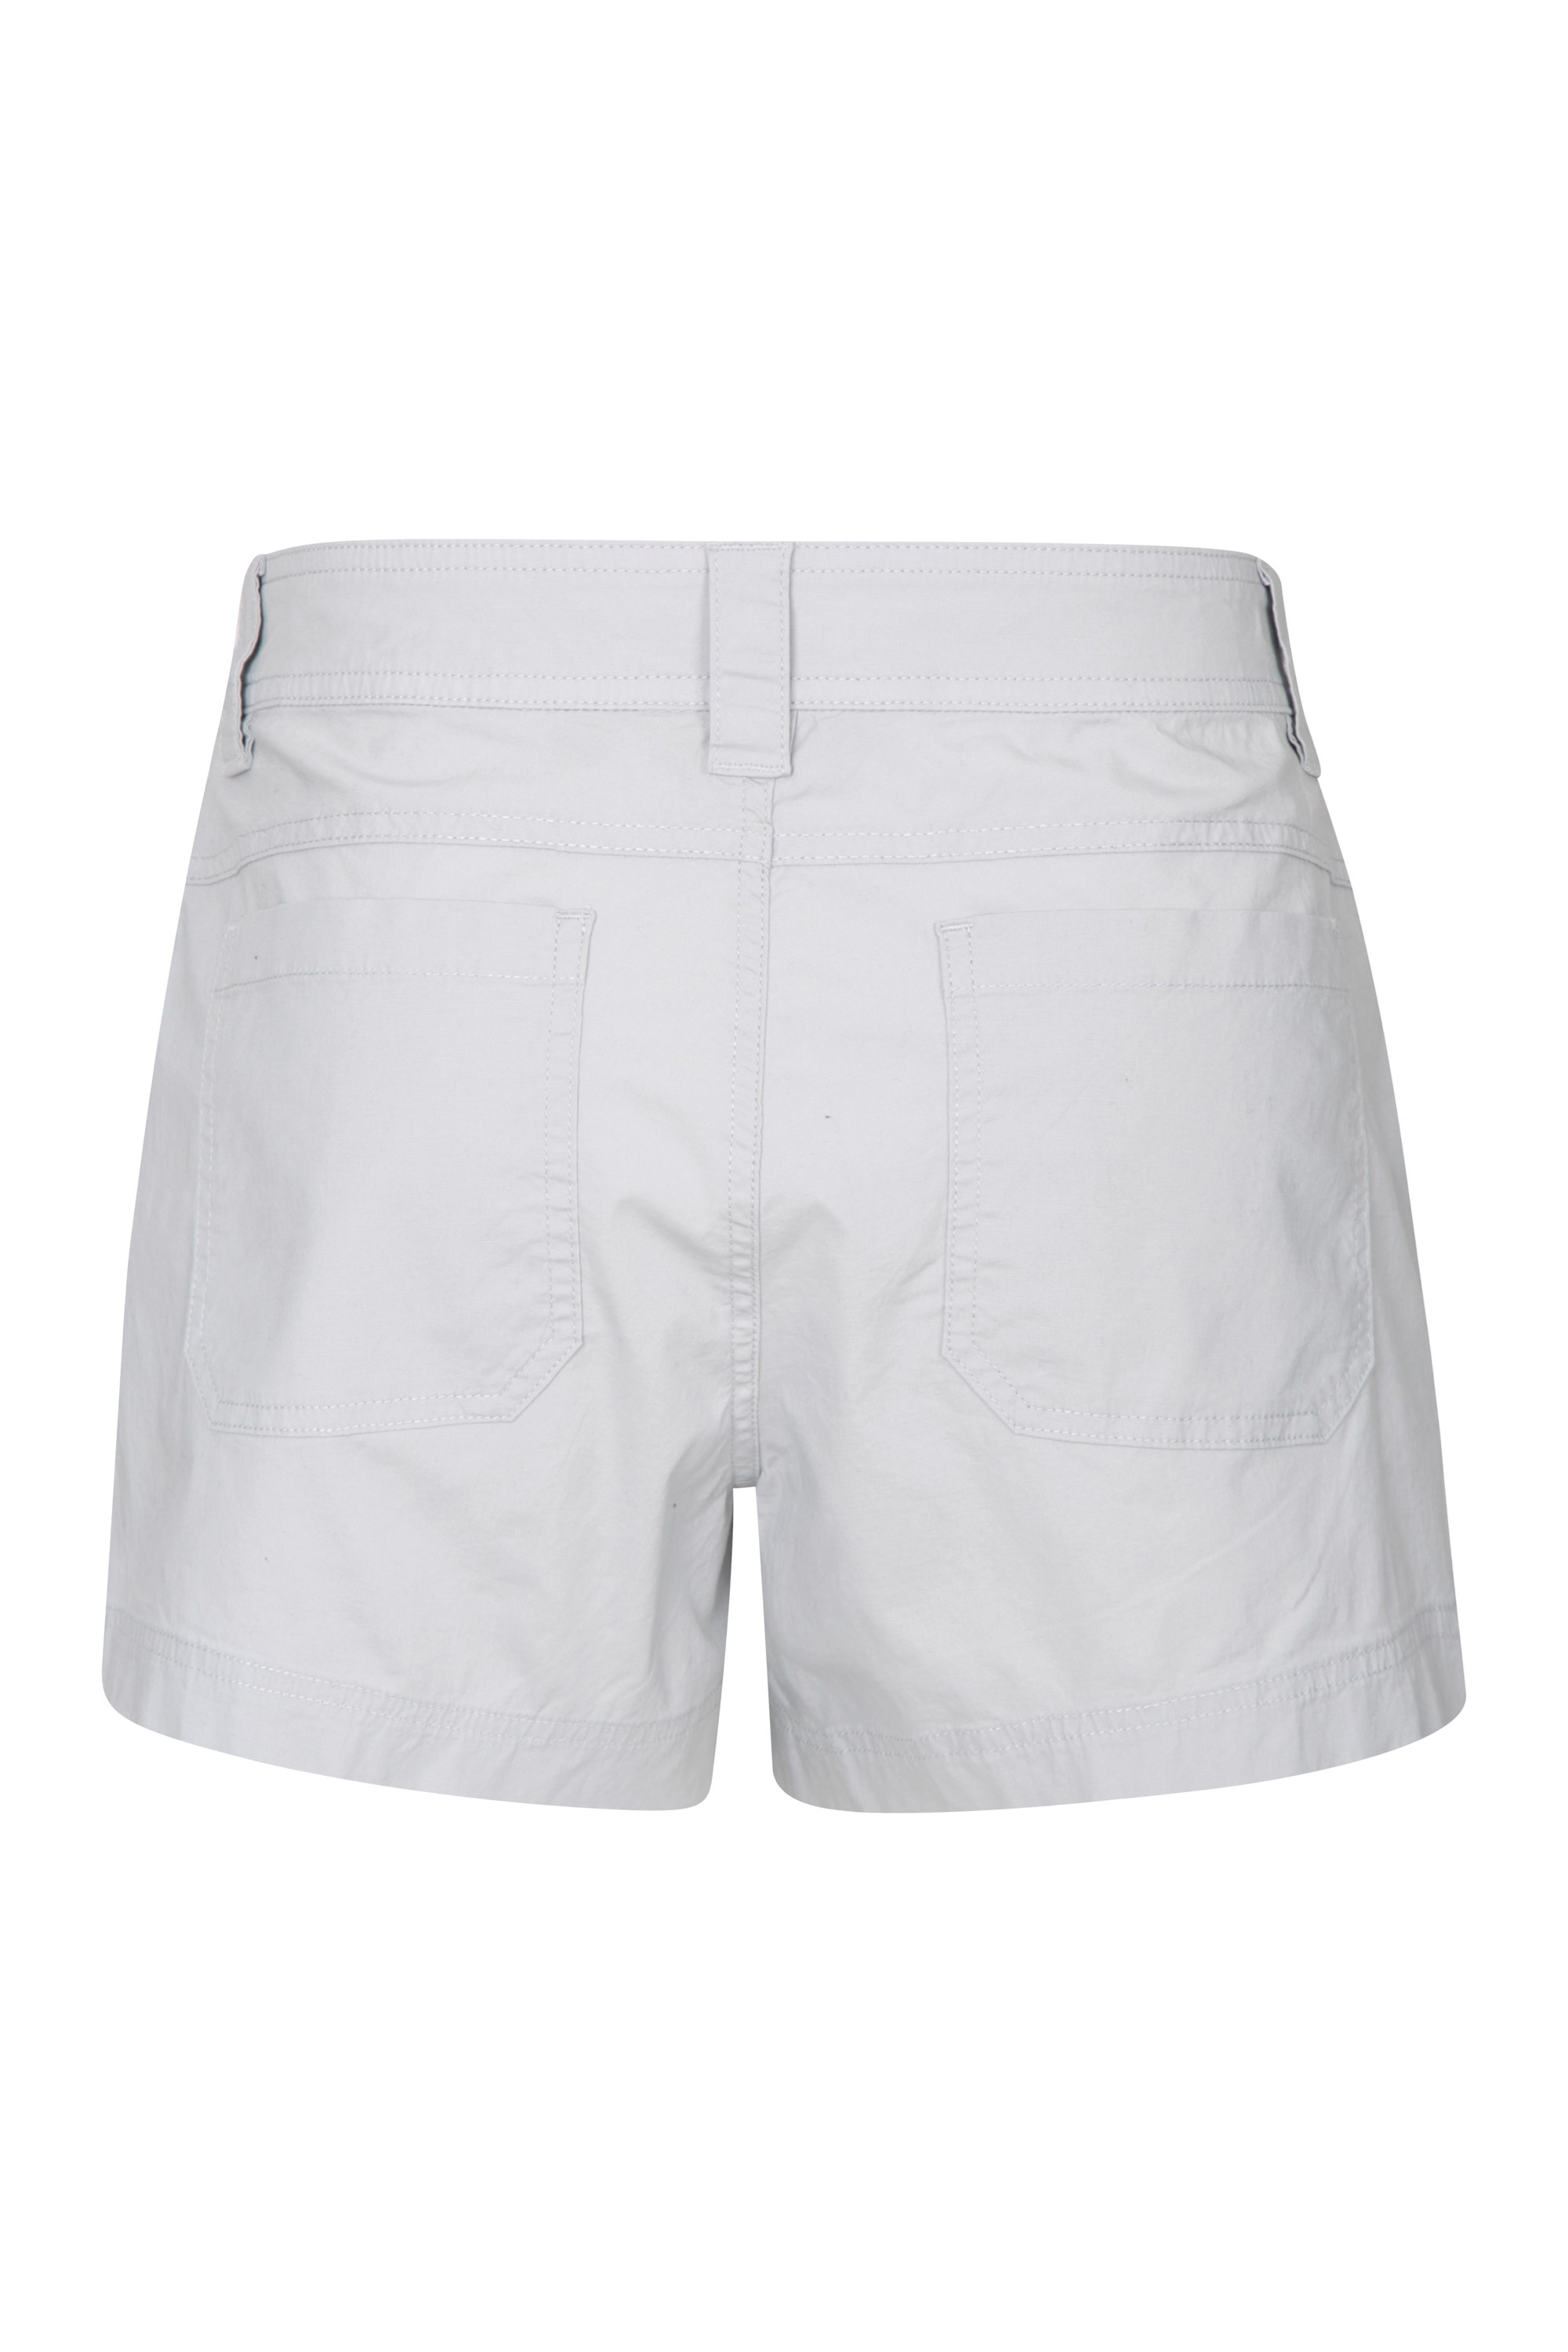 Mountain Warehouse Coast Womens Shorty Shorts Ladies Summer Pants